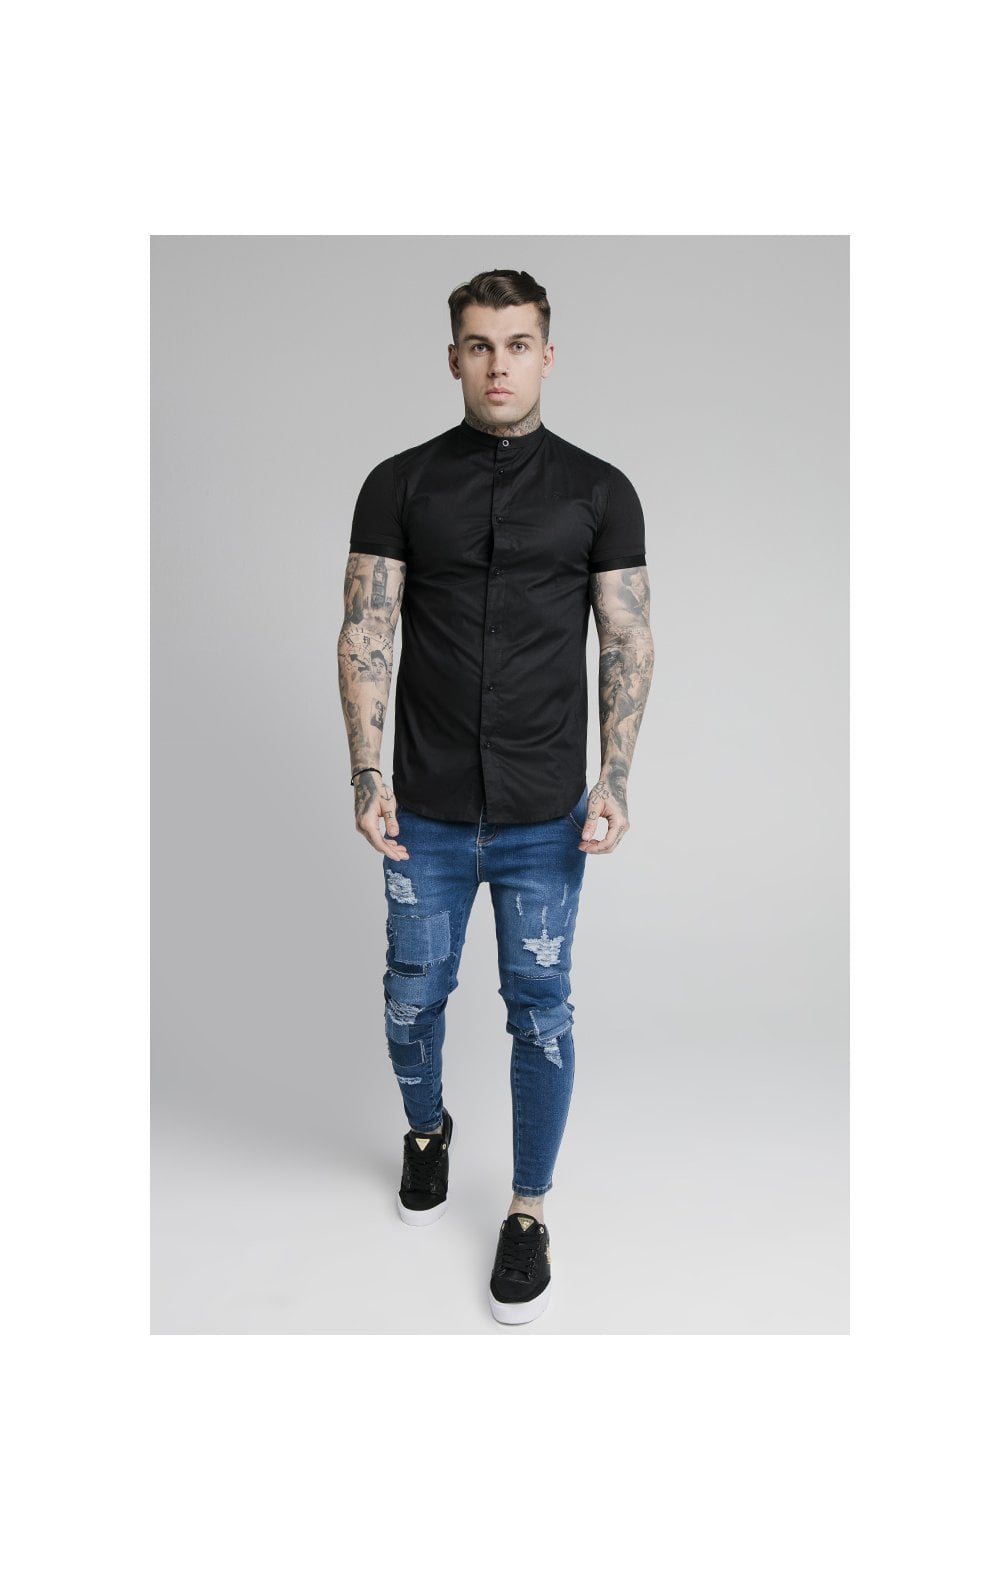 SikSilk S/S Fade Grandad Shirt - Black & Neon Fade (3)